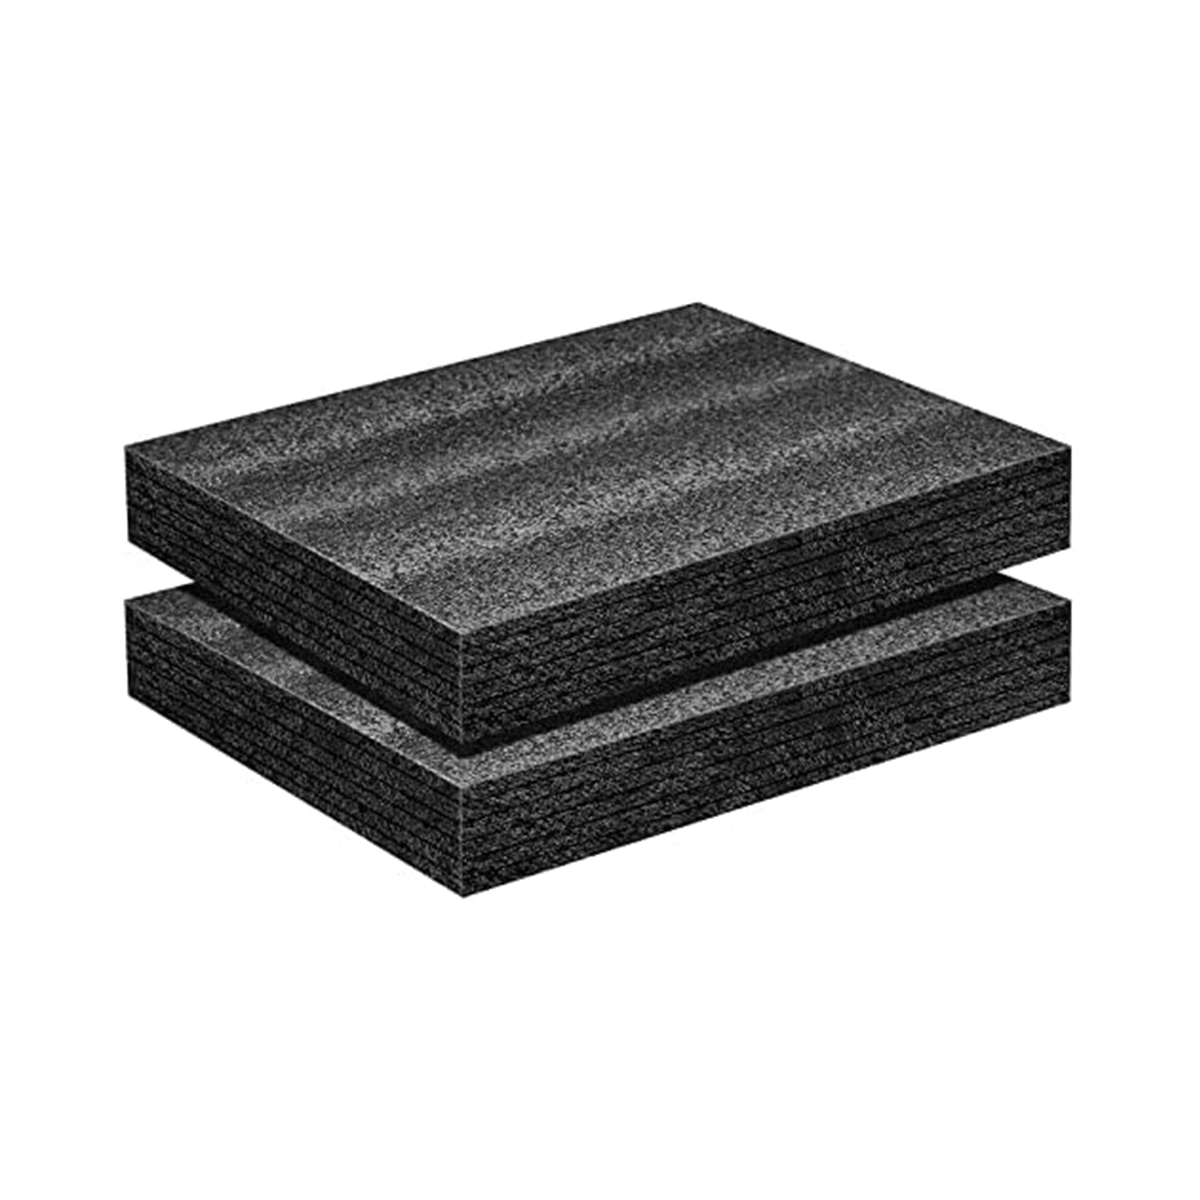 Polyethylene Foam 16X12X2Inch Polyethylene Foam Sheet Thick Foam Padding Foam Inserts for Crafts Polyethylene Foam Pad, Black